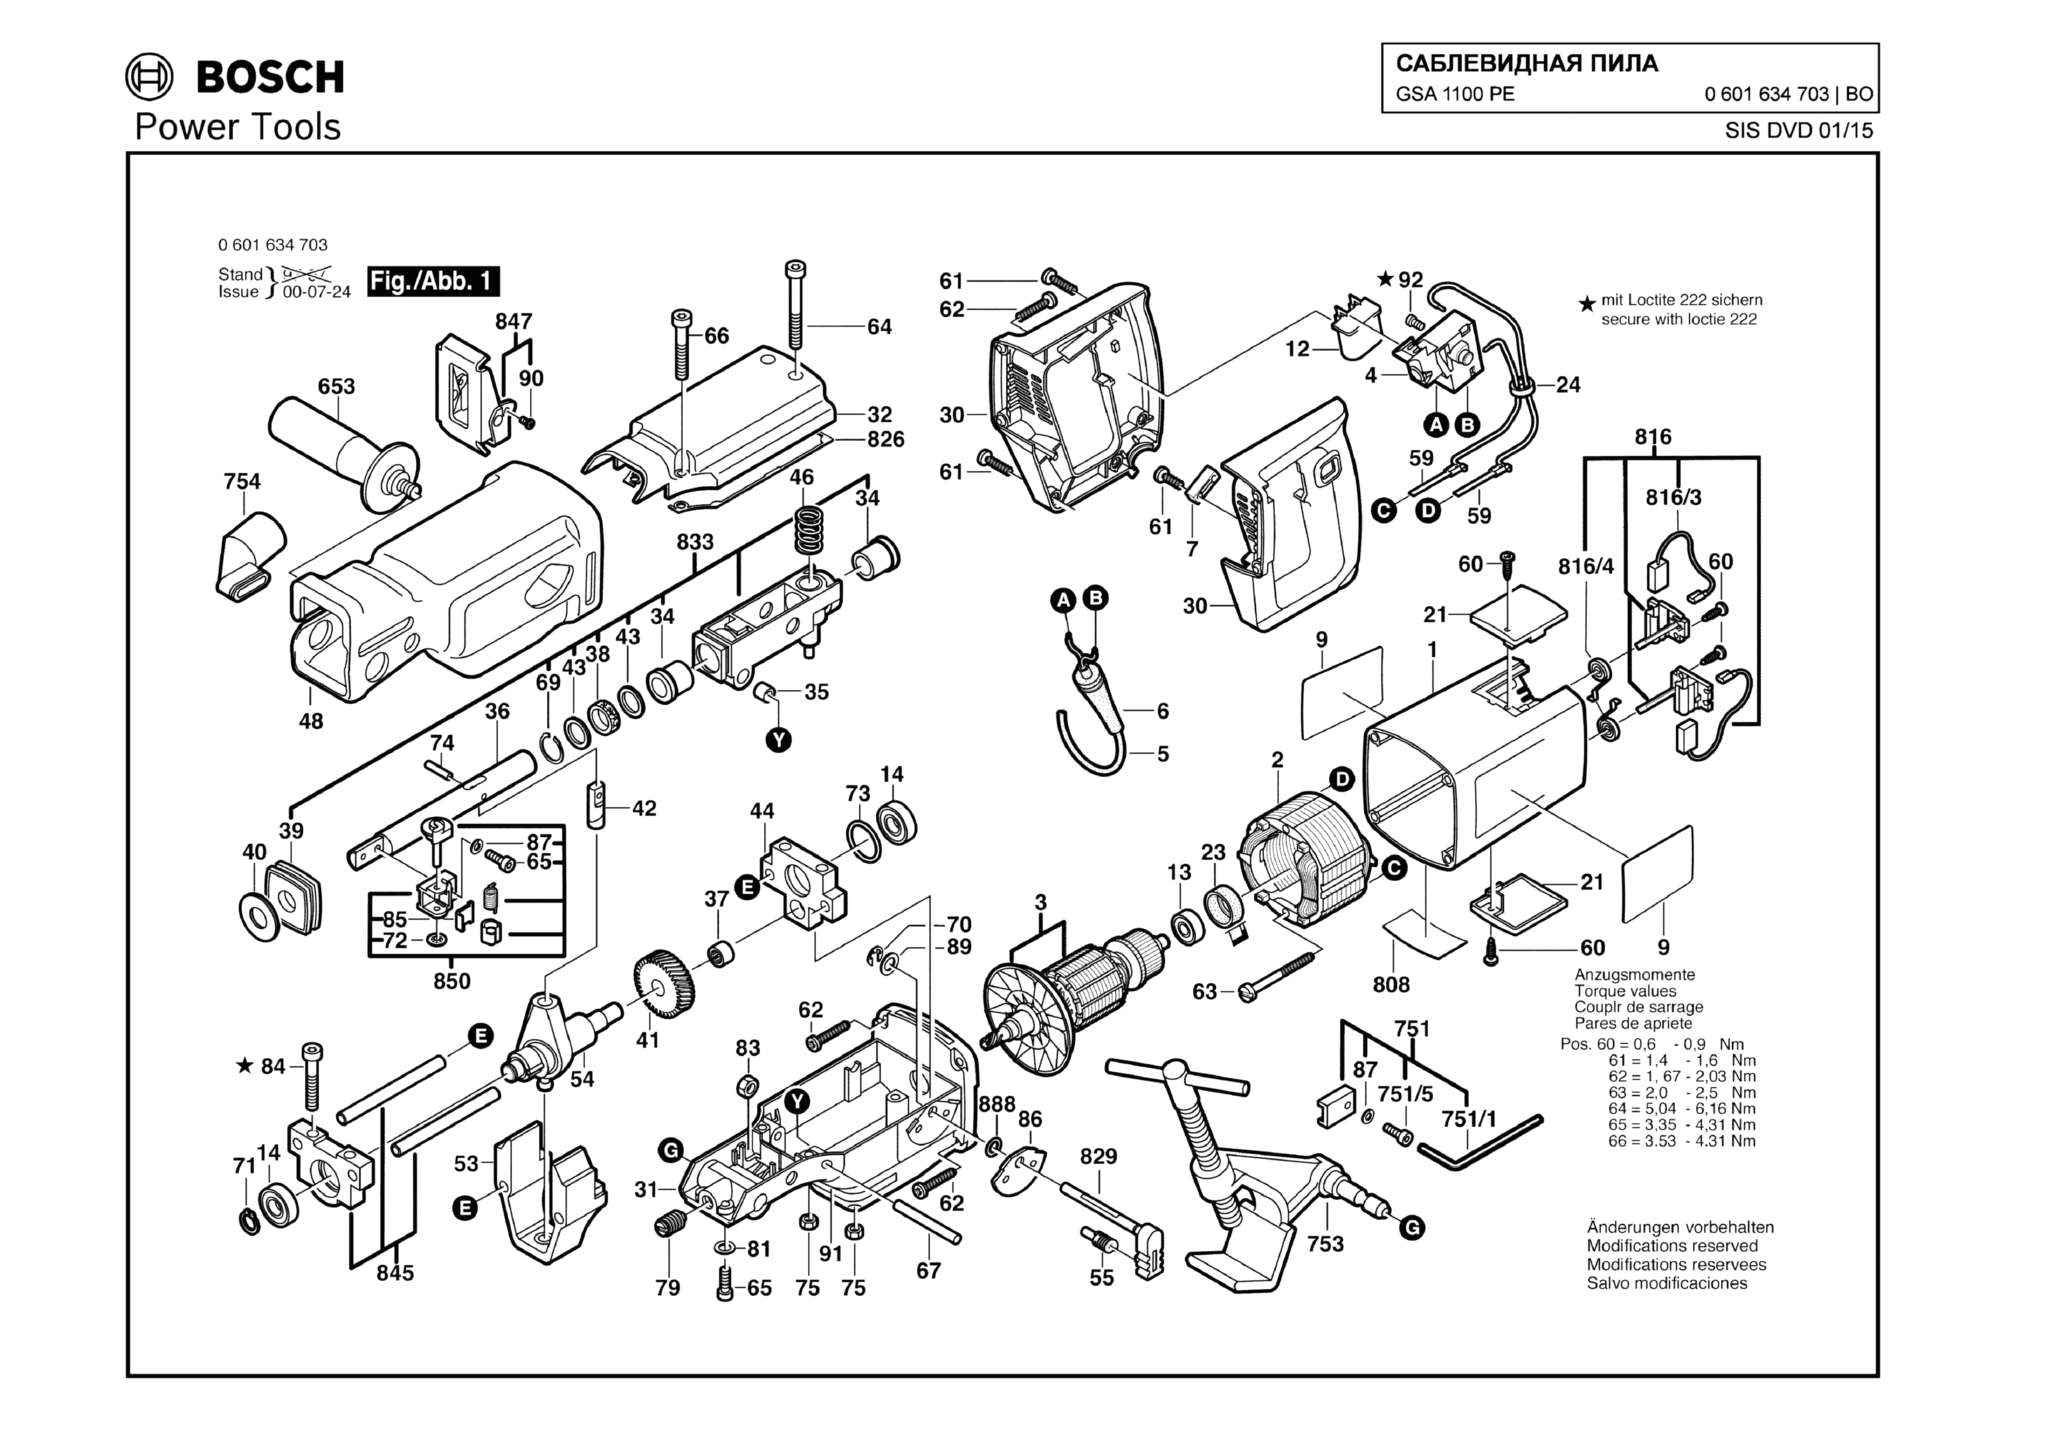 Запчасти, схема и деталировка Bosch GSA 1100 PE (ТИП 0601634703)